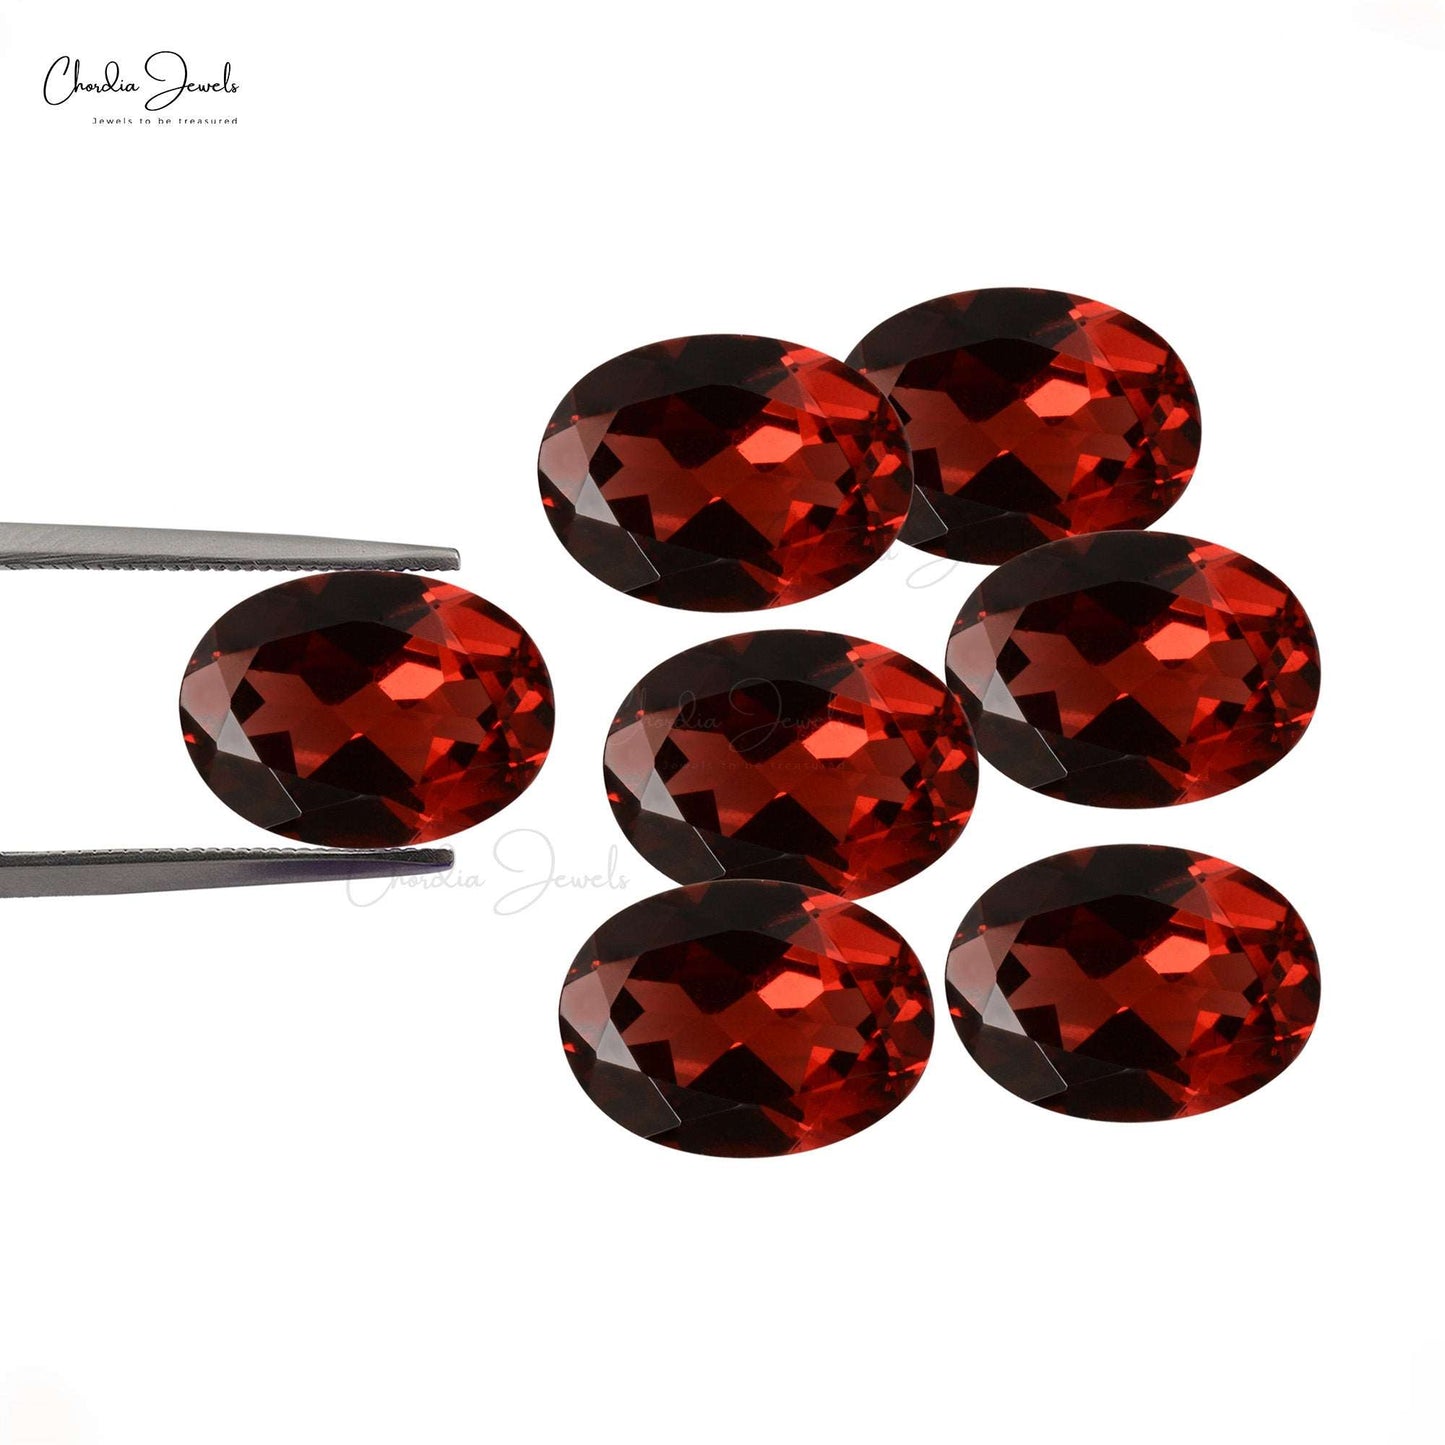 12x10mm Oval Cut Red Garnet Loose Gemstone Wholesale Price, 1 Piece